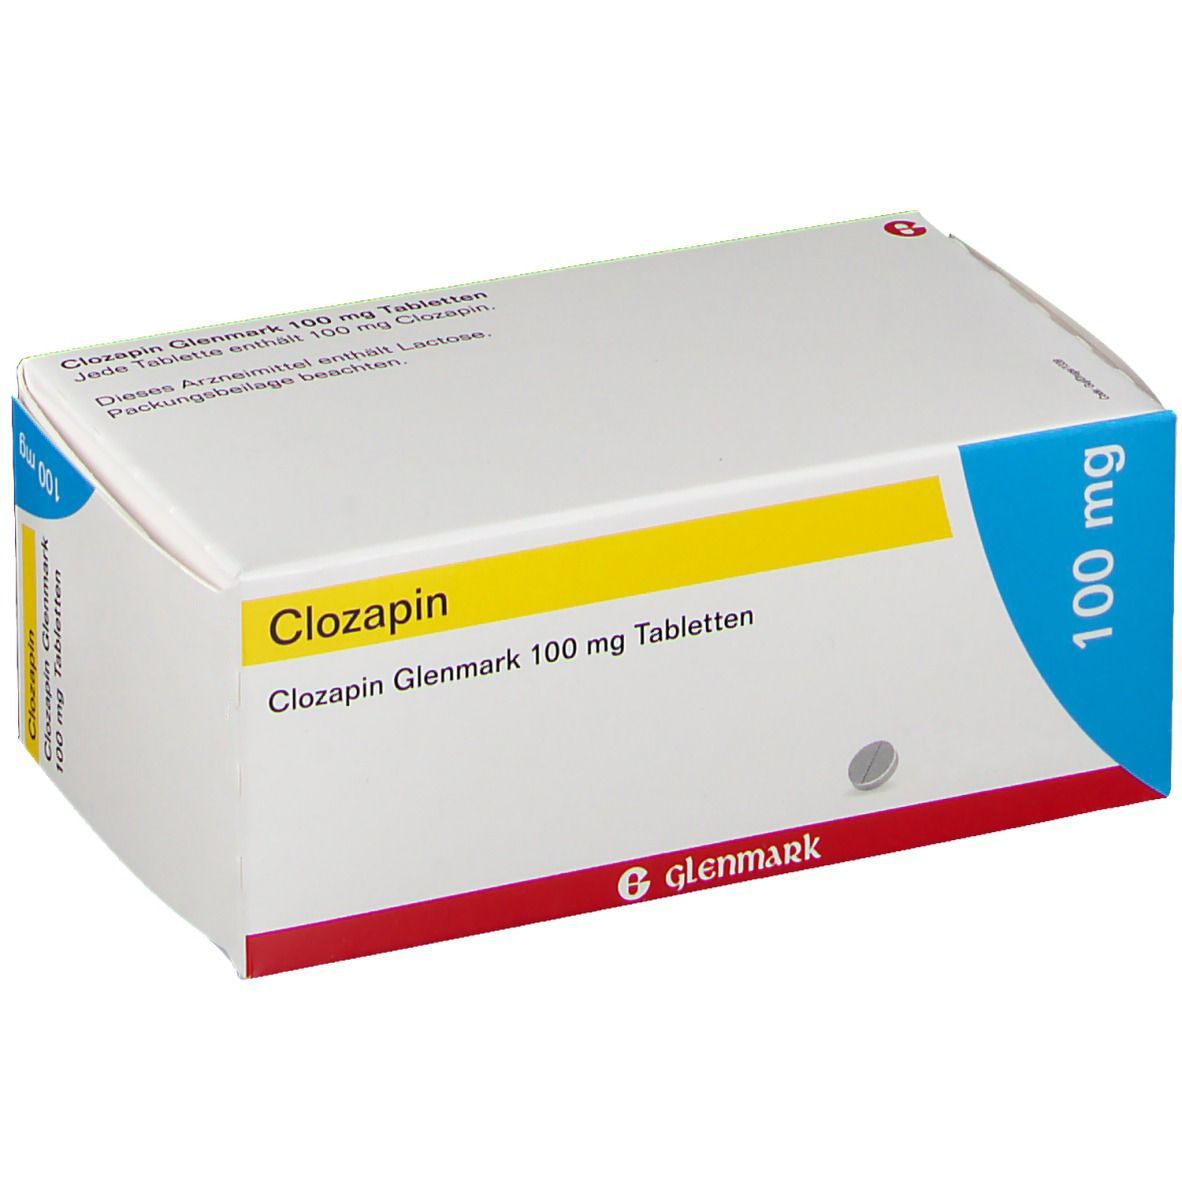 Clozapin Glenmark 100 mg